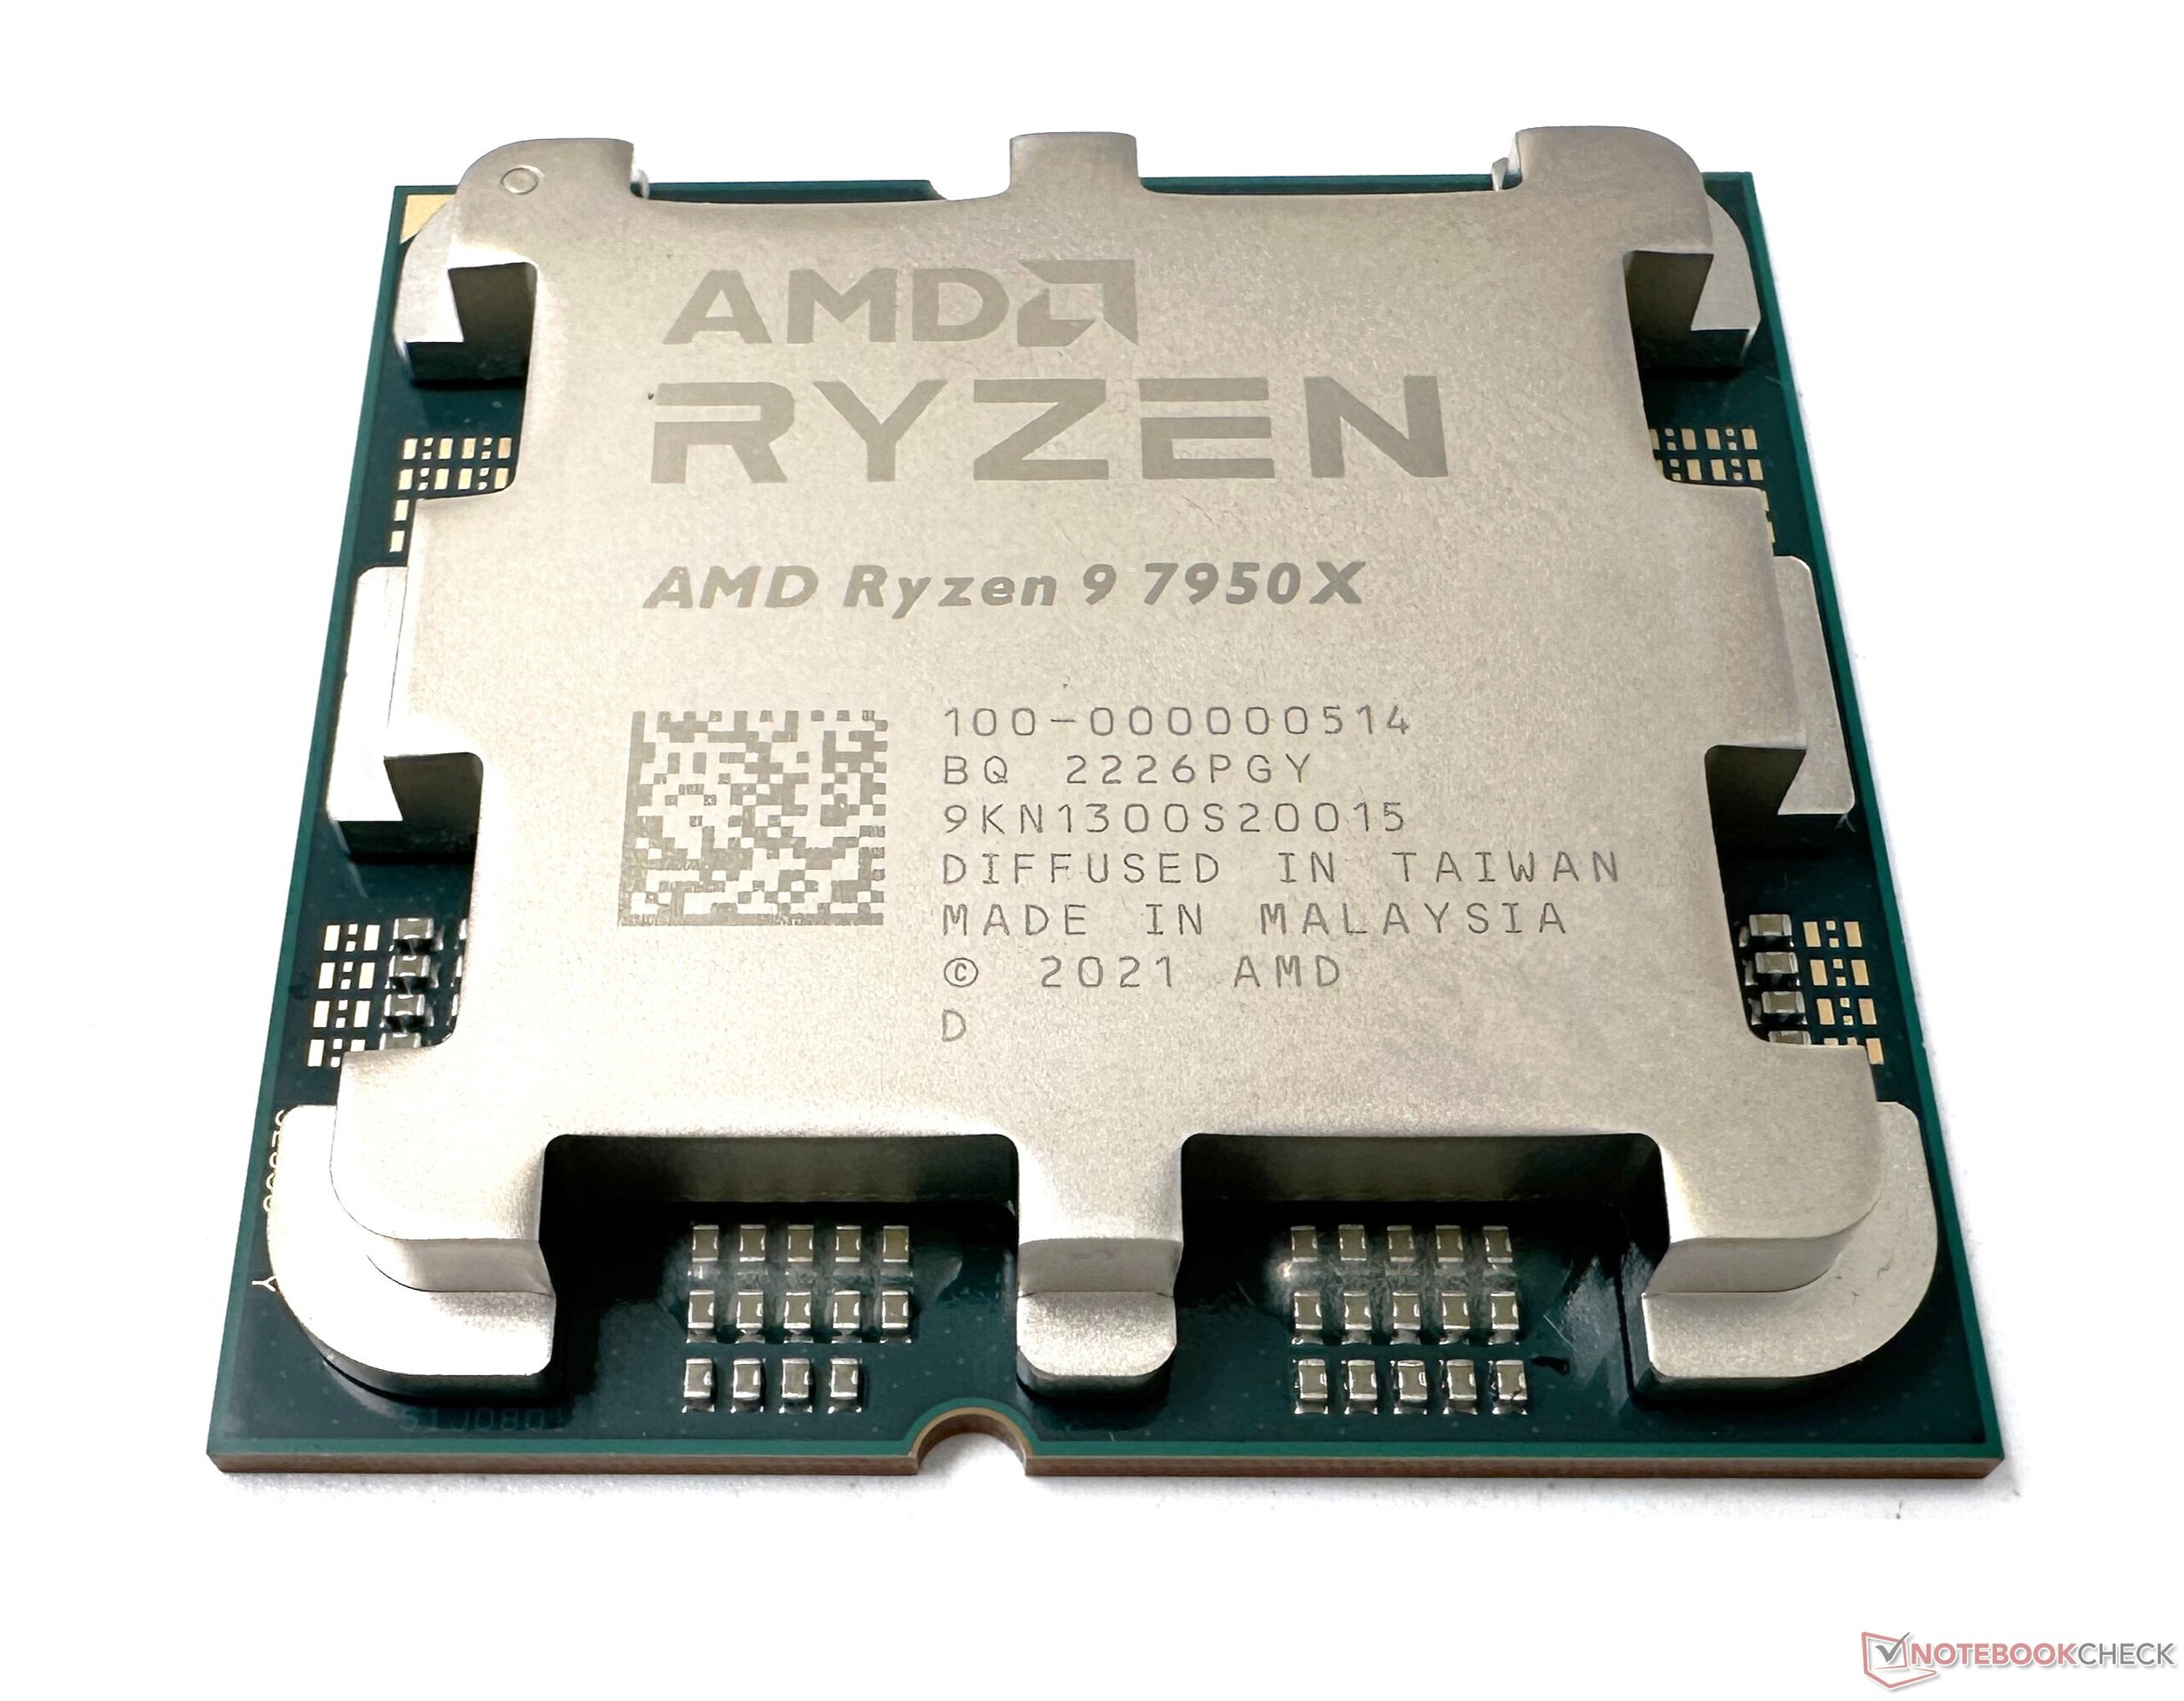 AMD Ryzen 9 7950X3D 3D V-Cache CPU Benchmarks Leak: 10% Slower In  Multi-Thread & Similar Single-Core As 7950X